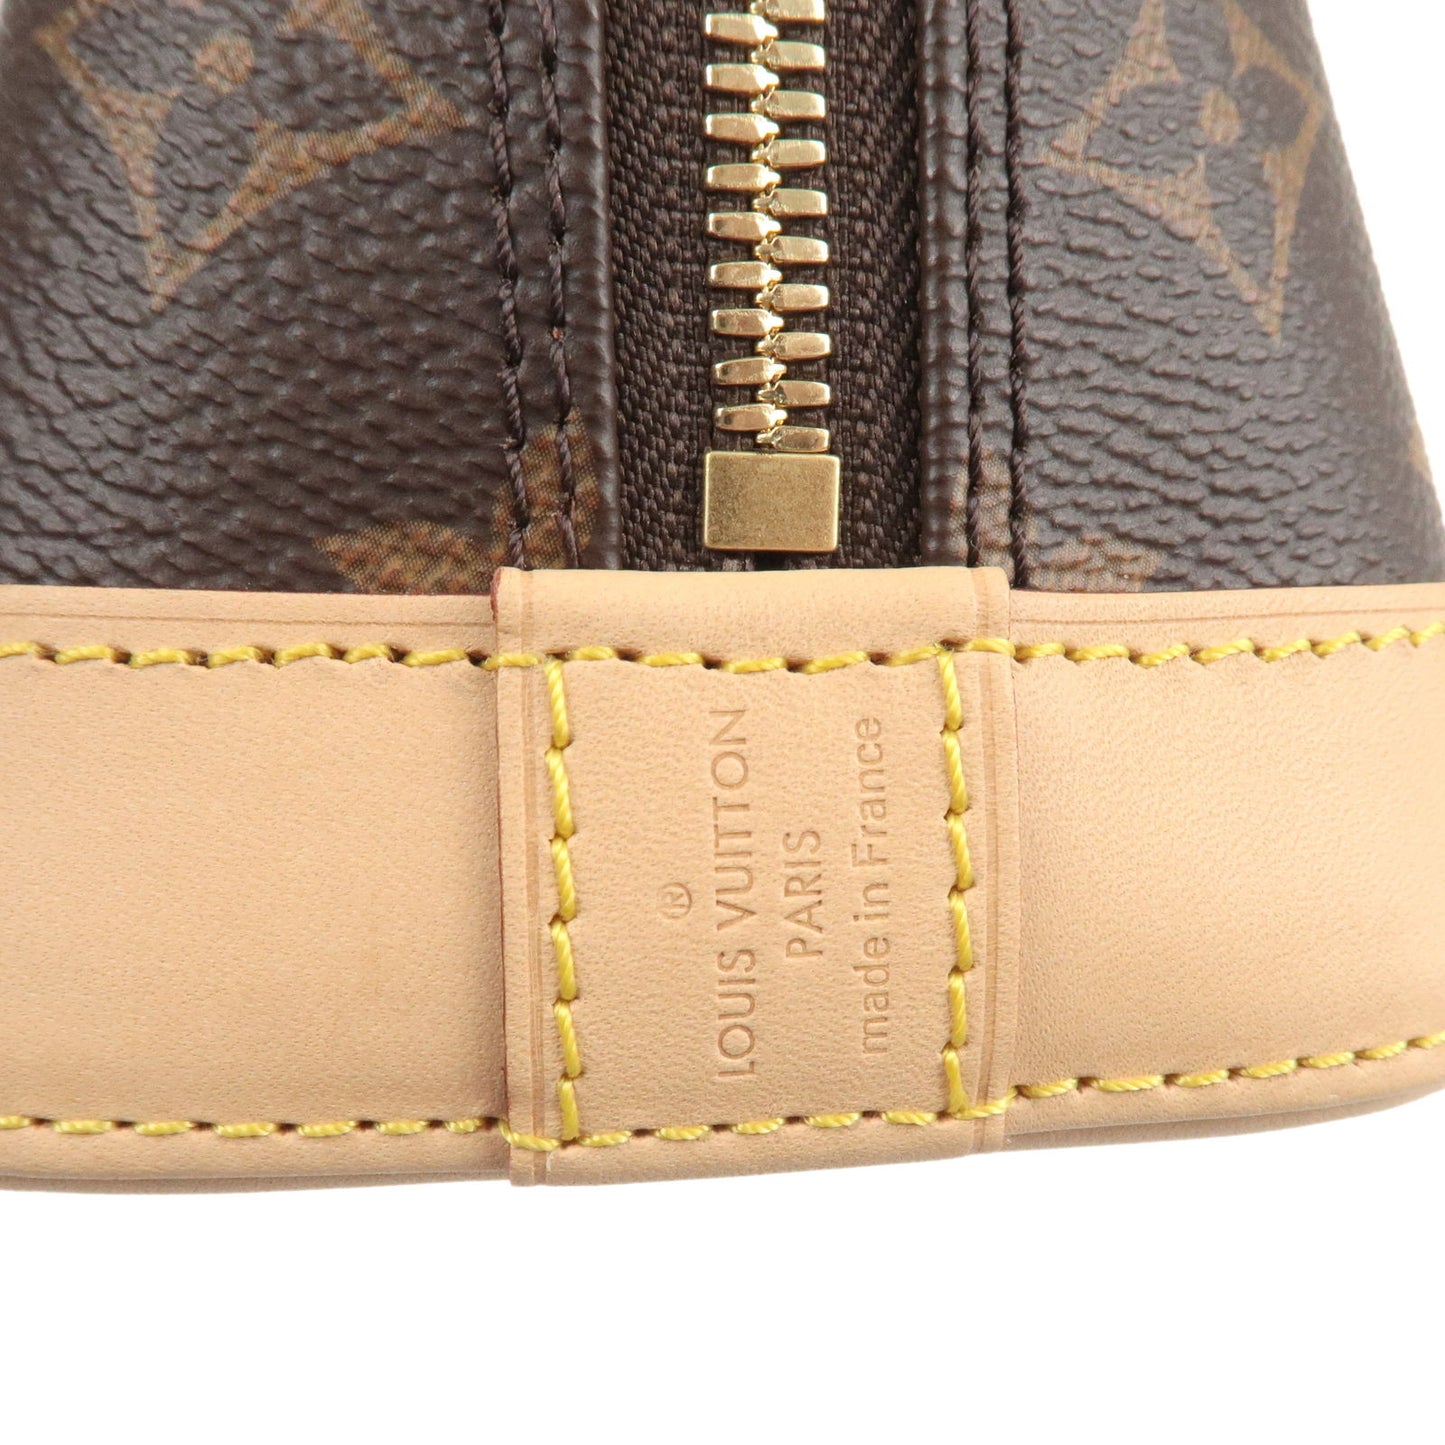 Louis Vuitton Alma!👜 #louisvuitton #louisvuittonbag #lv